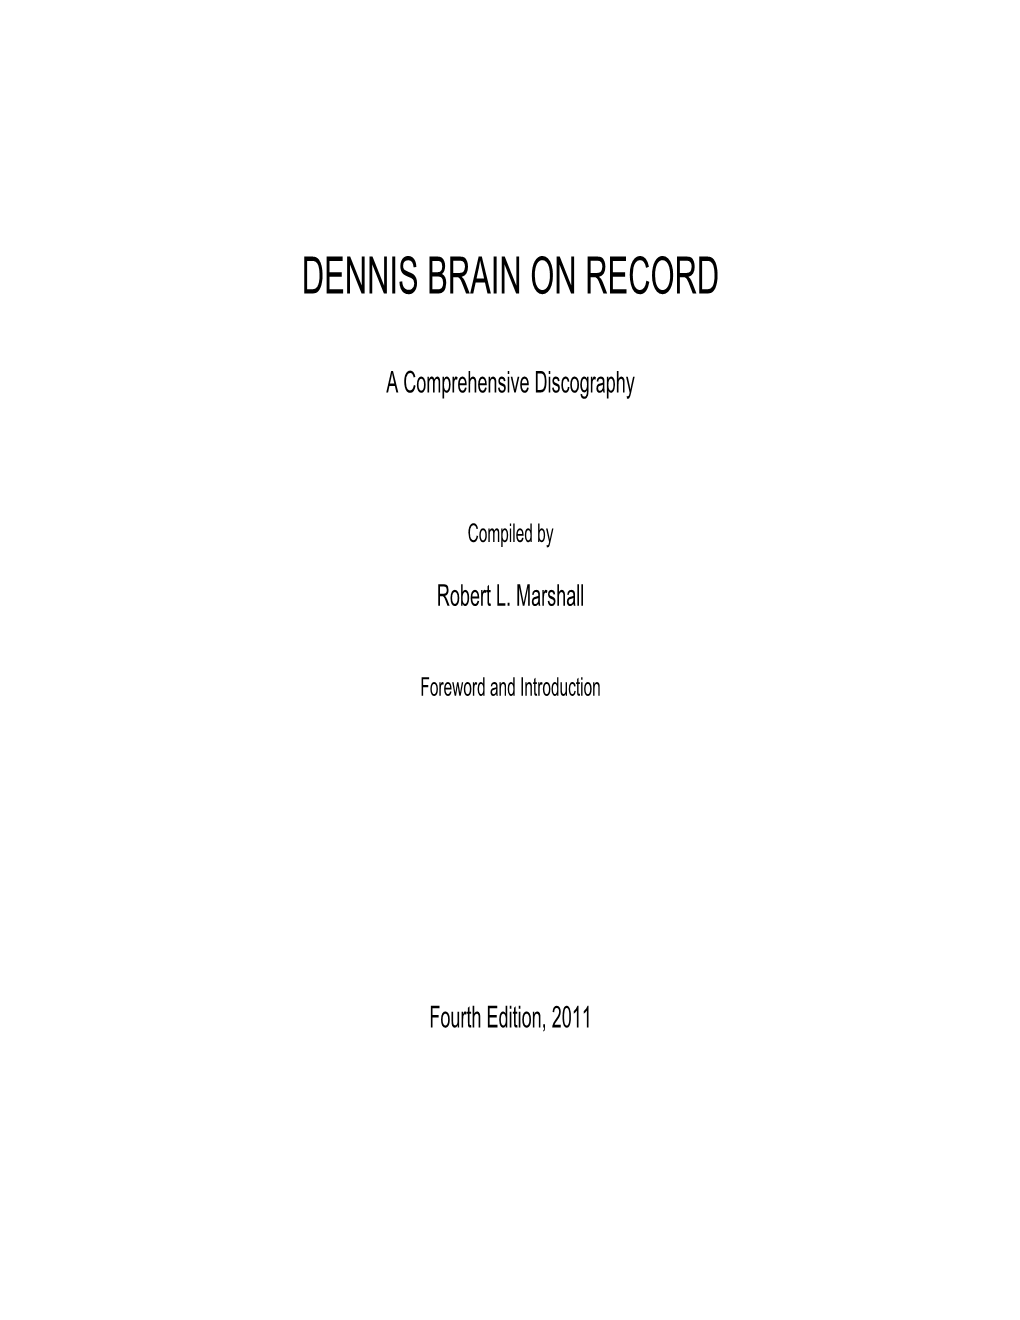 Dennis Brain on Record